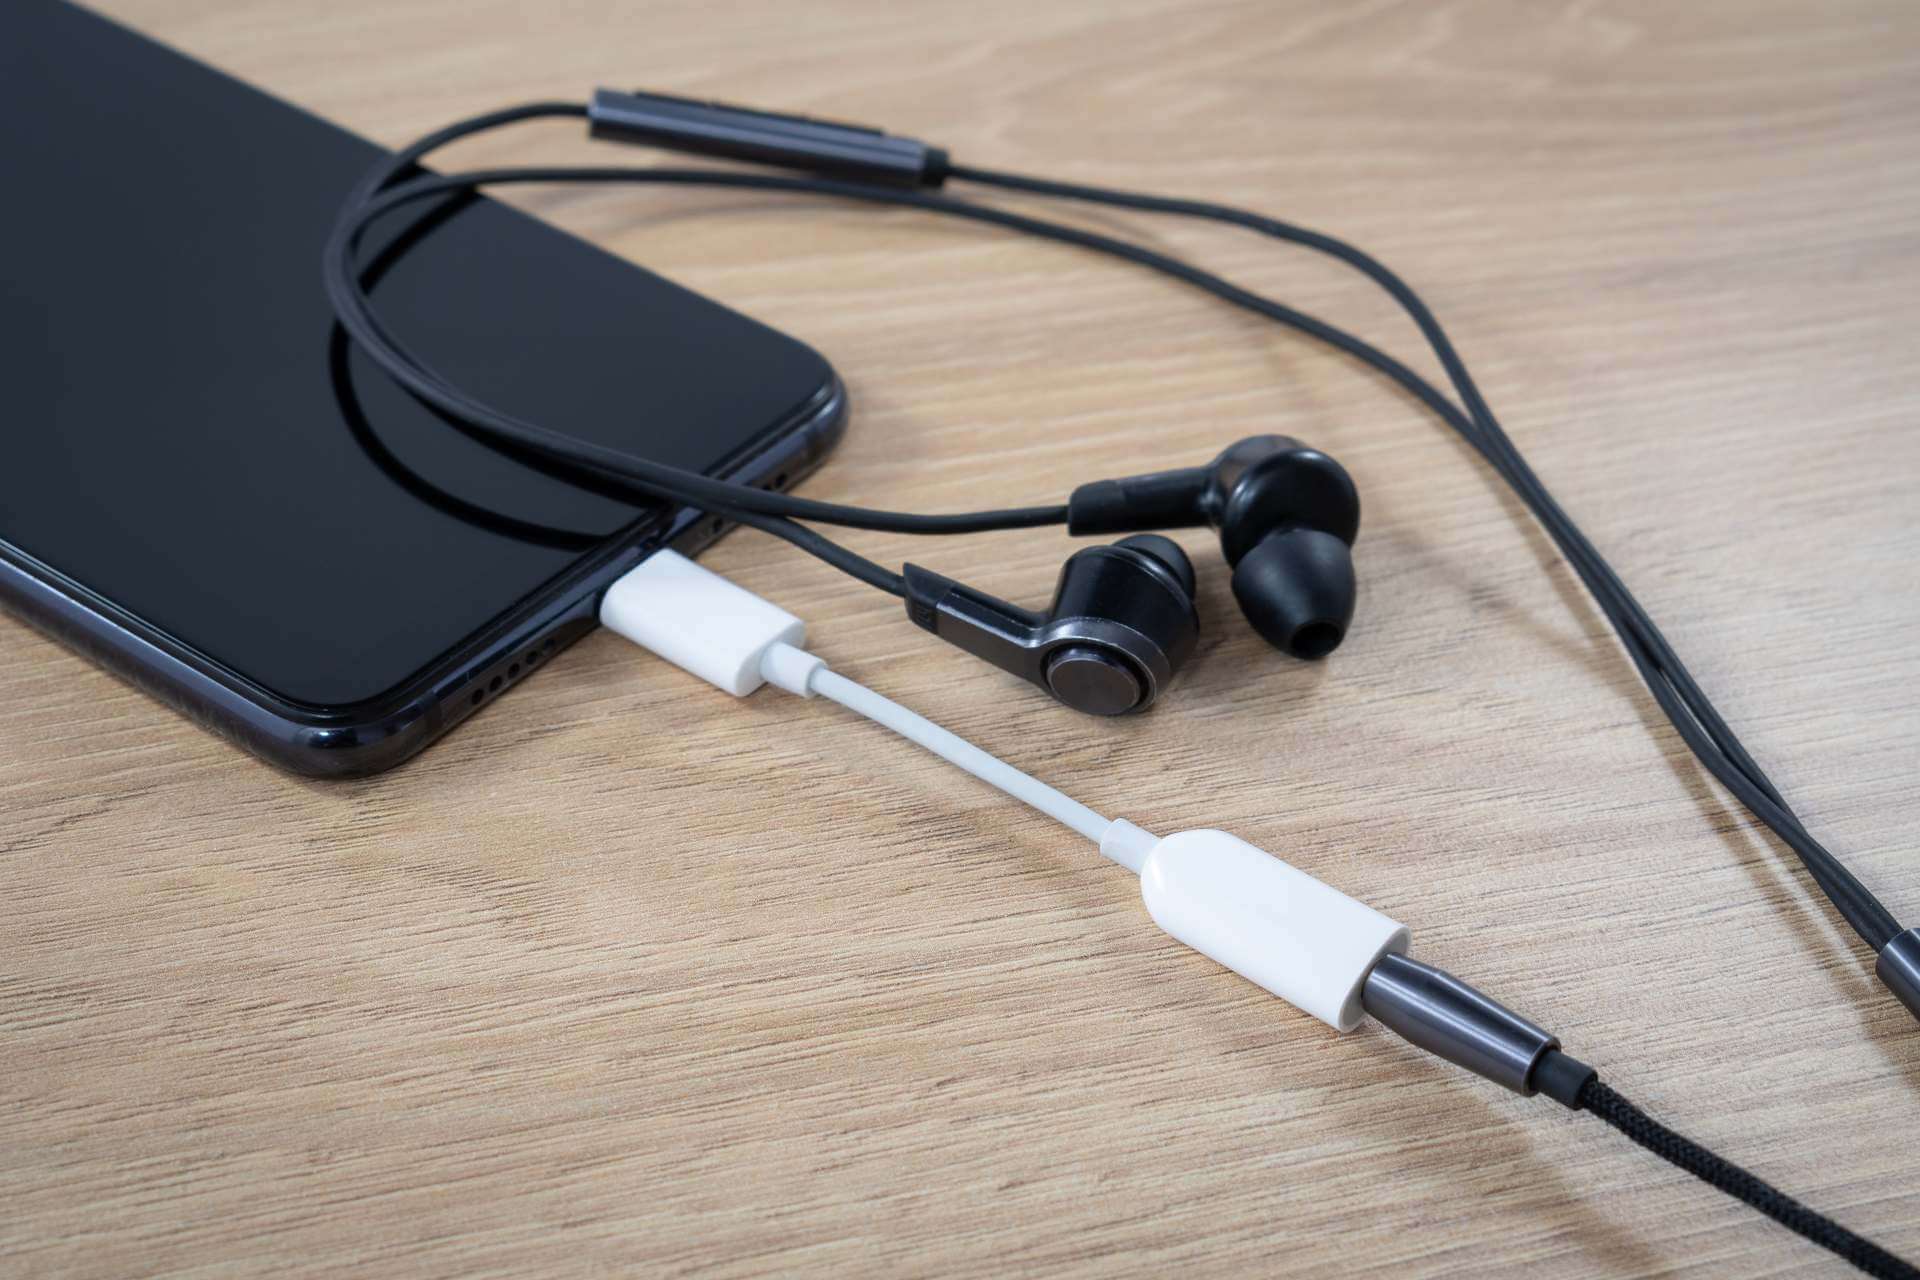 USB-C to 3.5mm headphone adapters